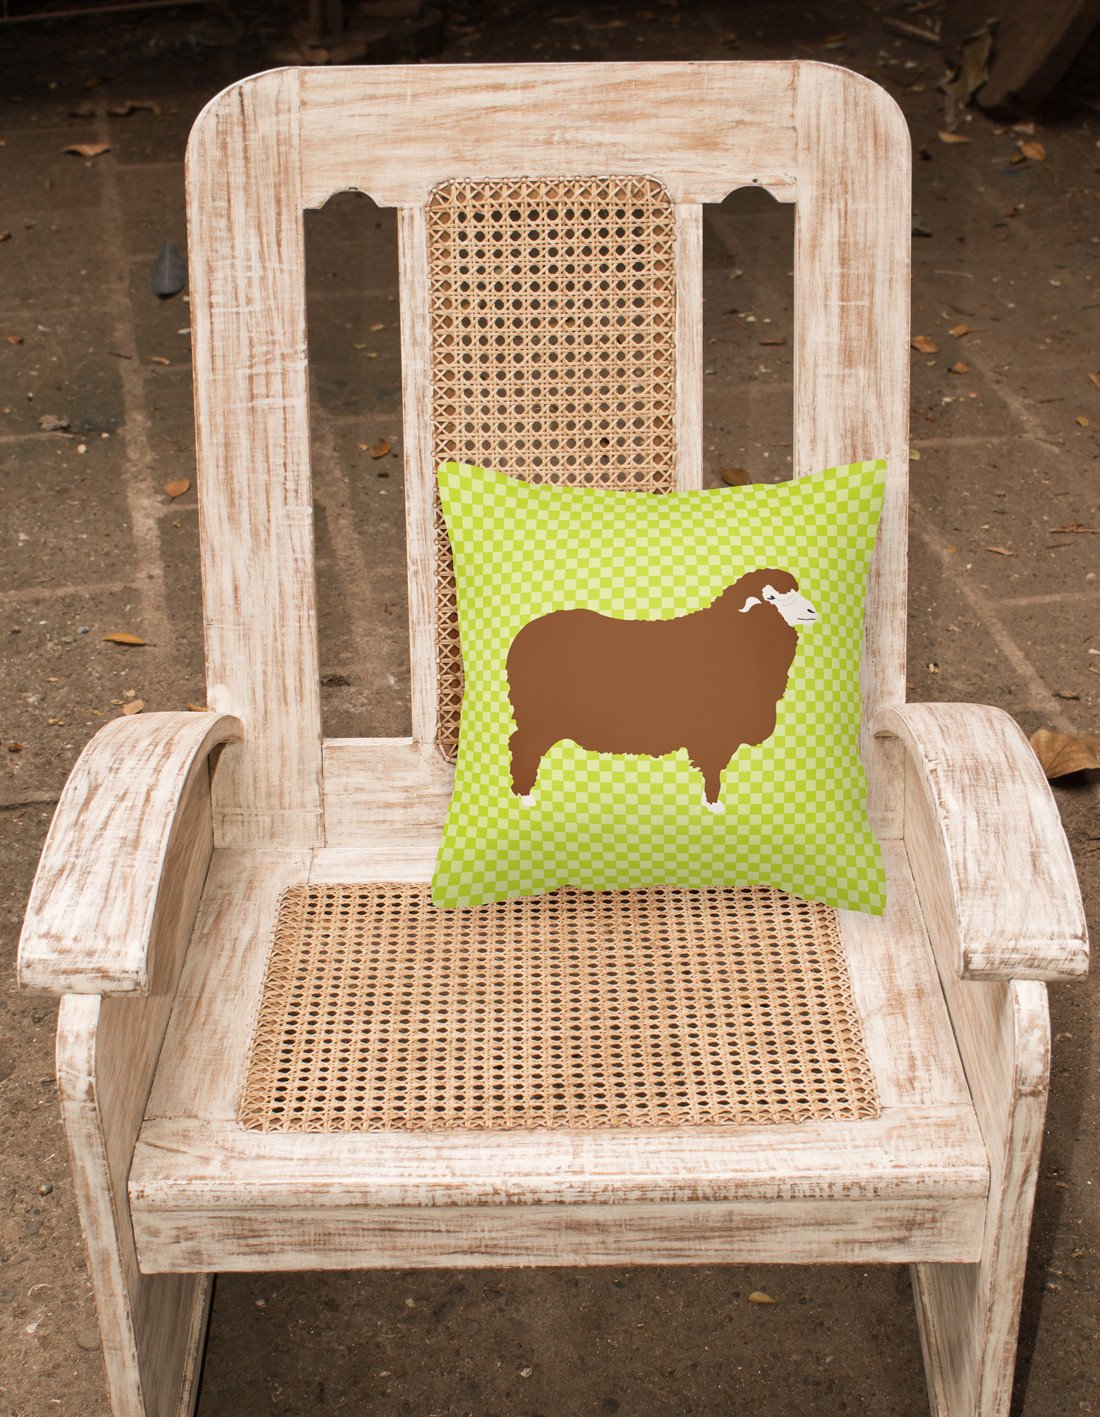 Merino Sheep Green Fabric Decorative Pillow BB7807PW1818 by Caroline's Treasures